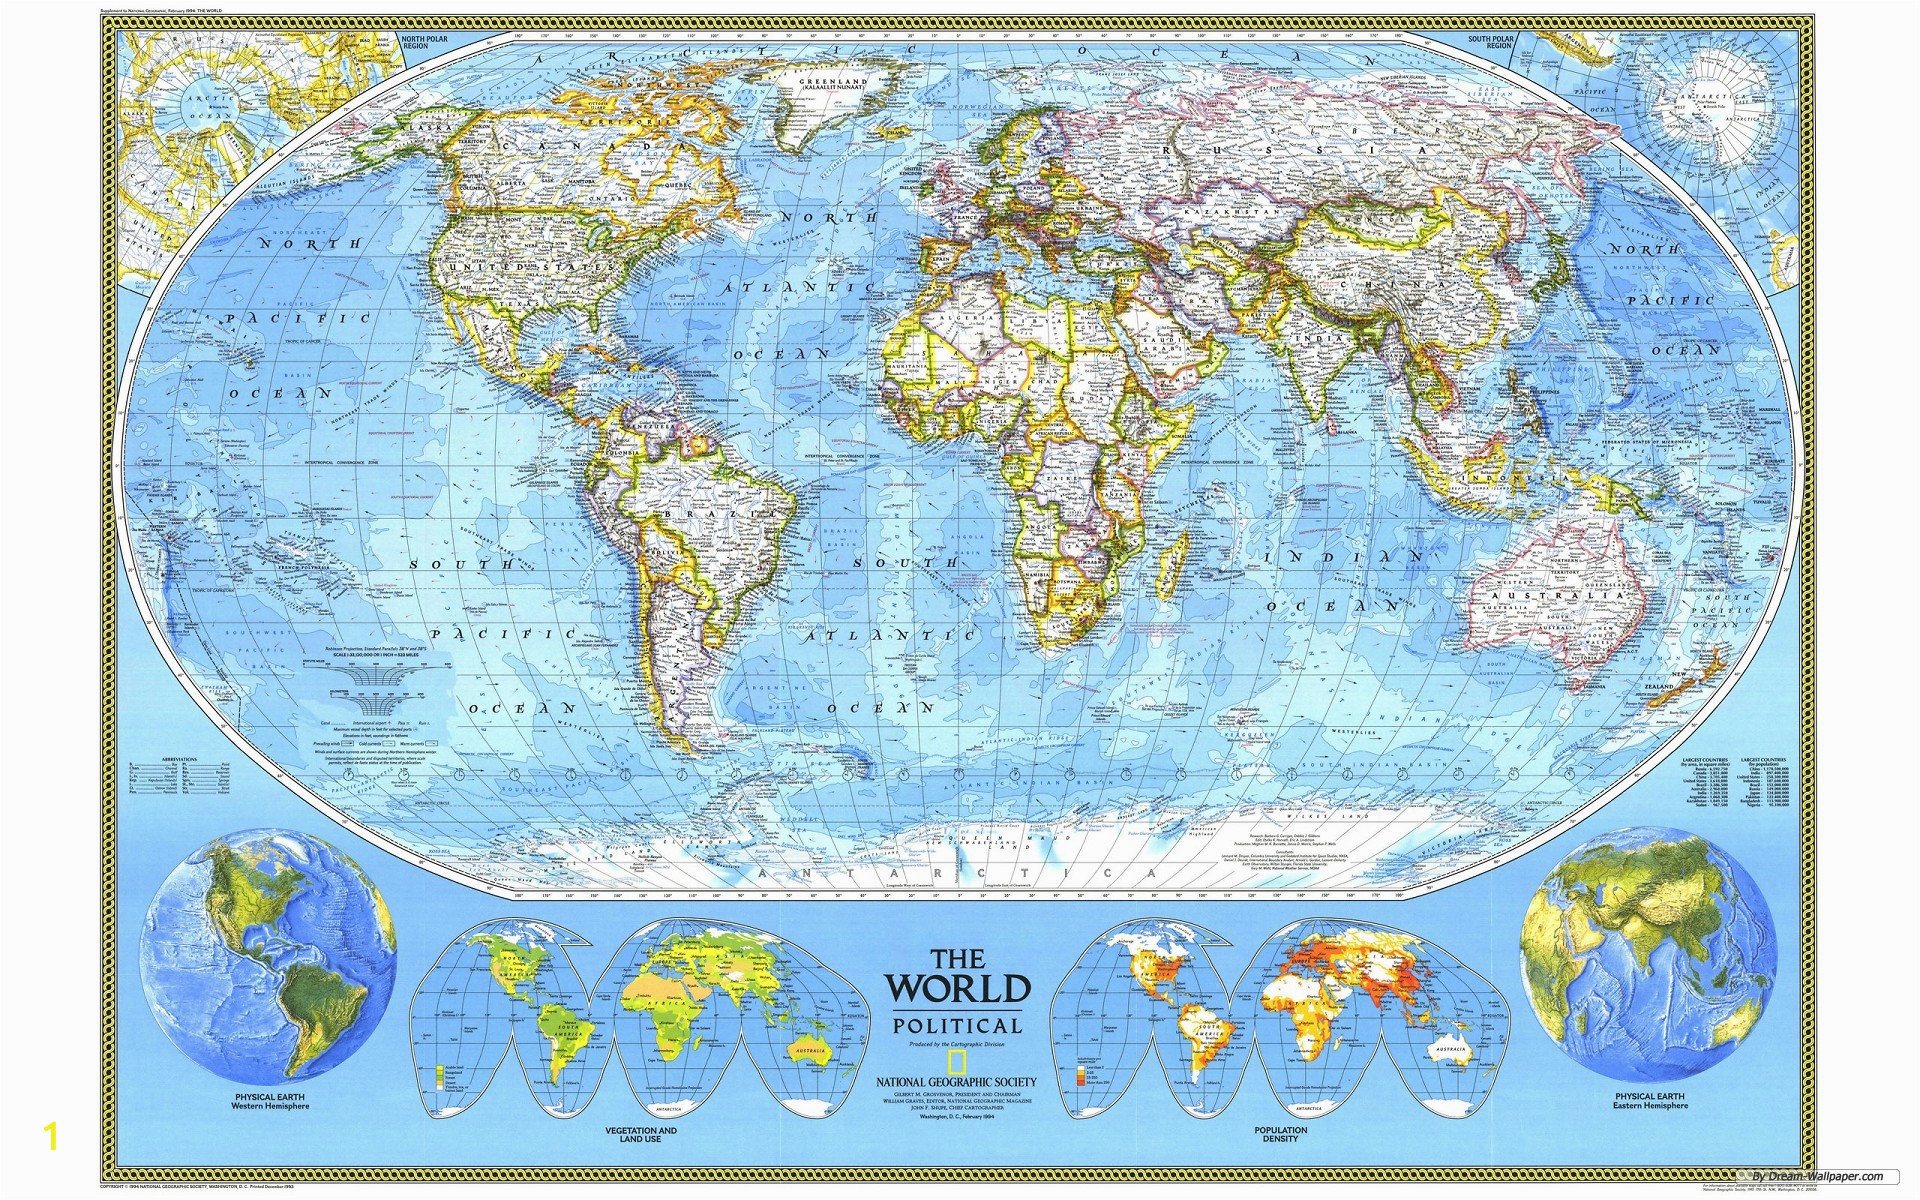 National Geographic World Map Wall Mural 48 ] Maps as Wallpaper On Wallpapersafari